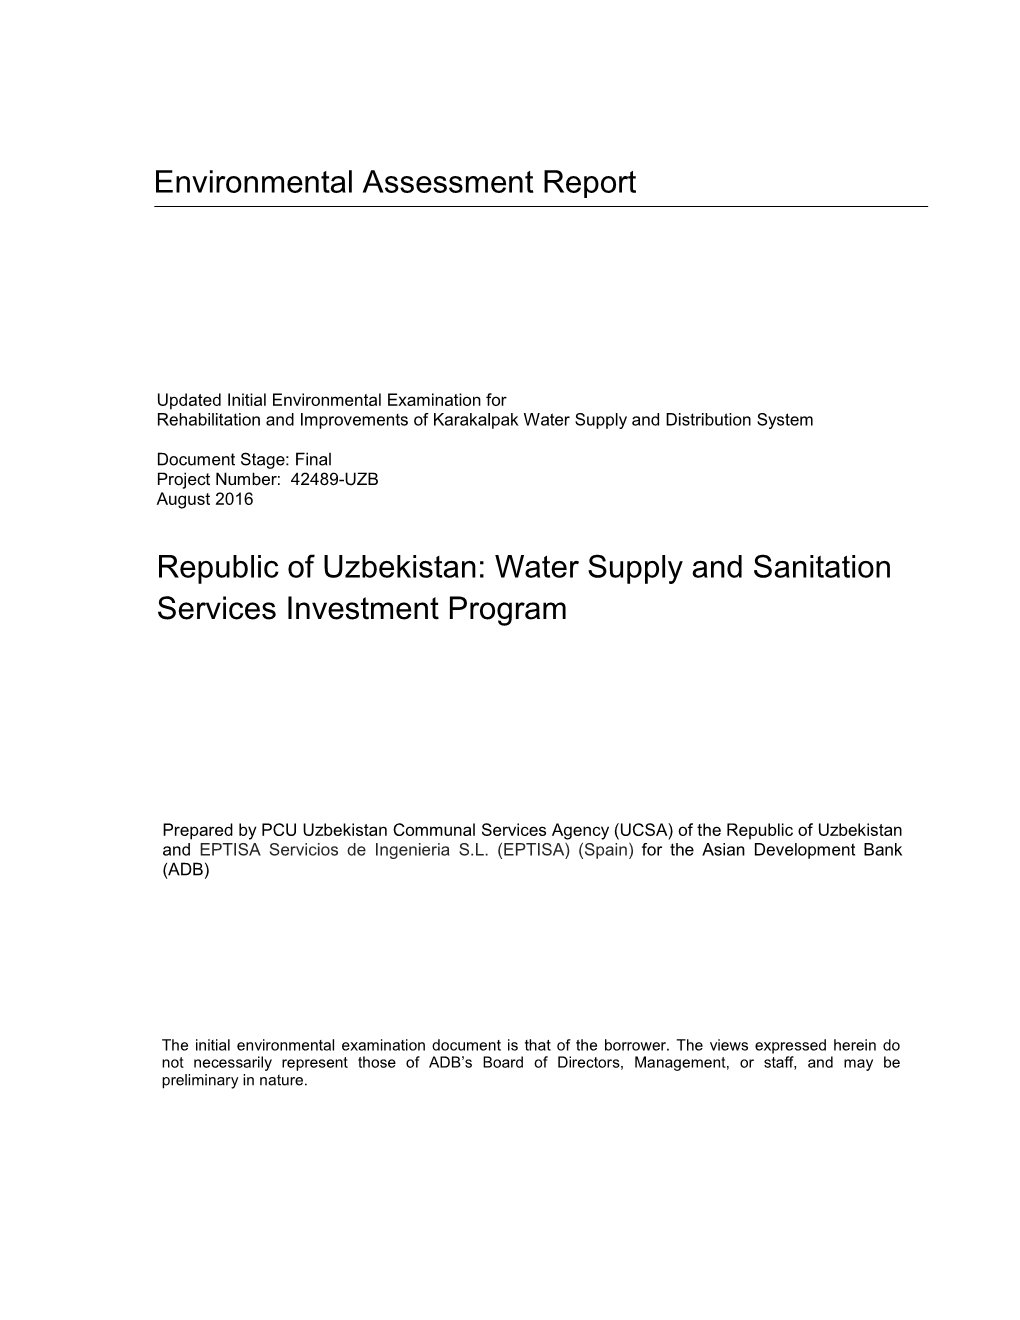 Republic of Uzbekistan: Water Supply and Sanitation Services Investment Program